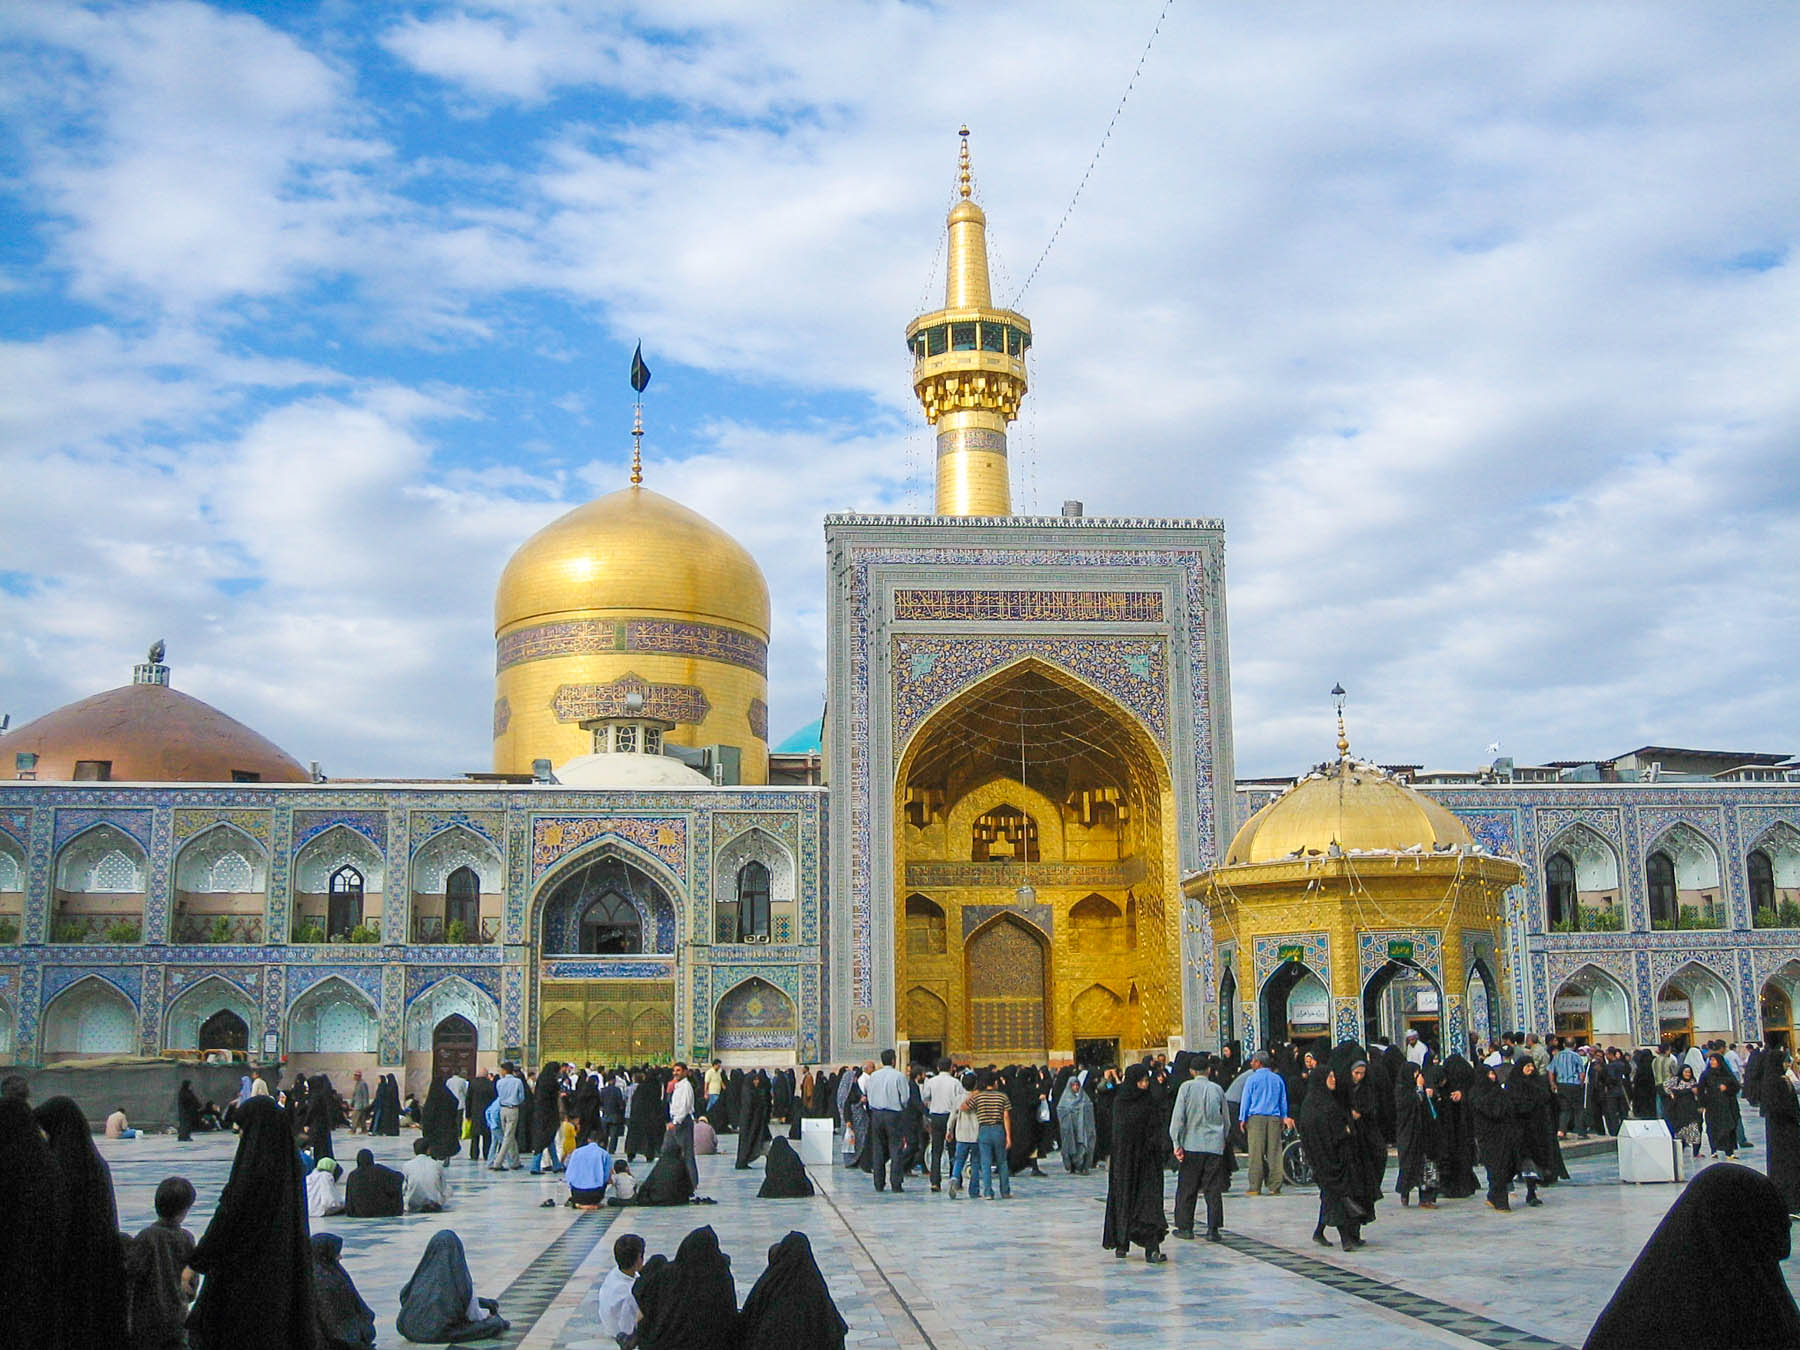 The shrine of Imam Reza in Mashhad, Iran